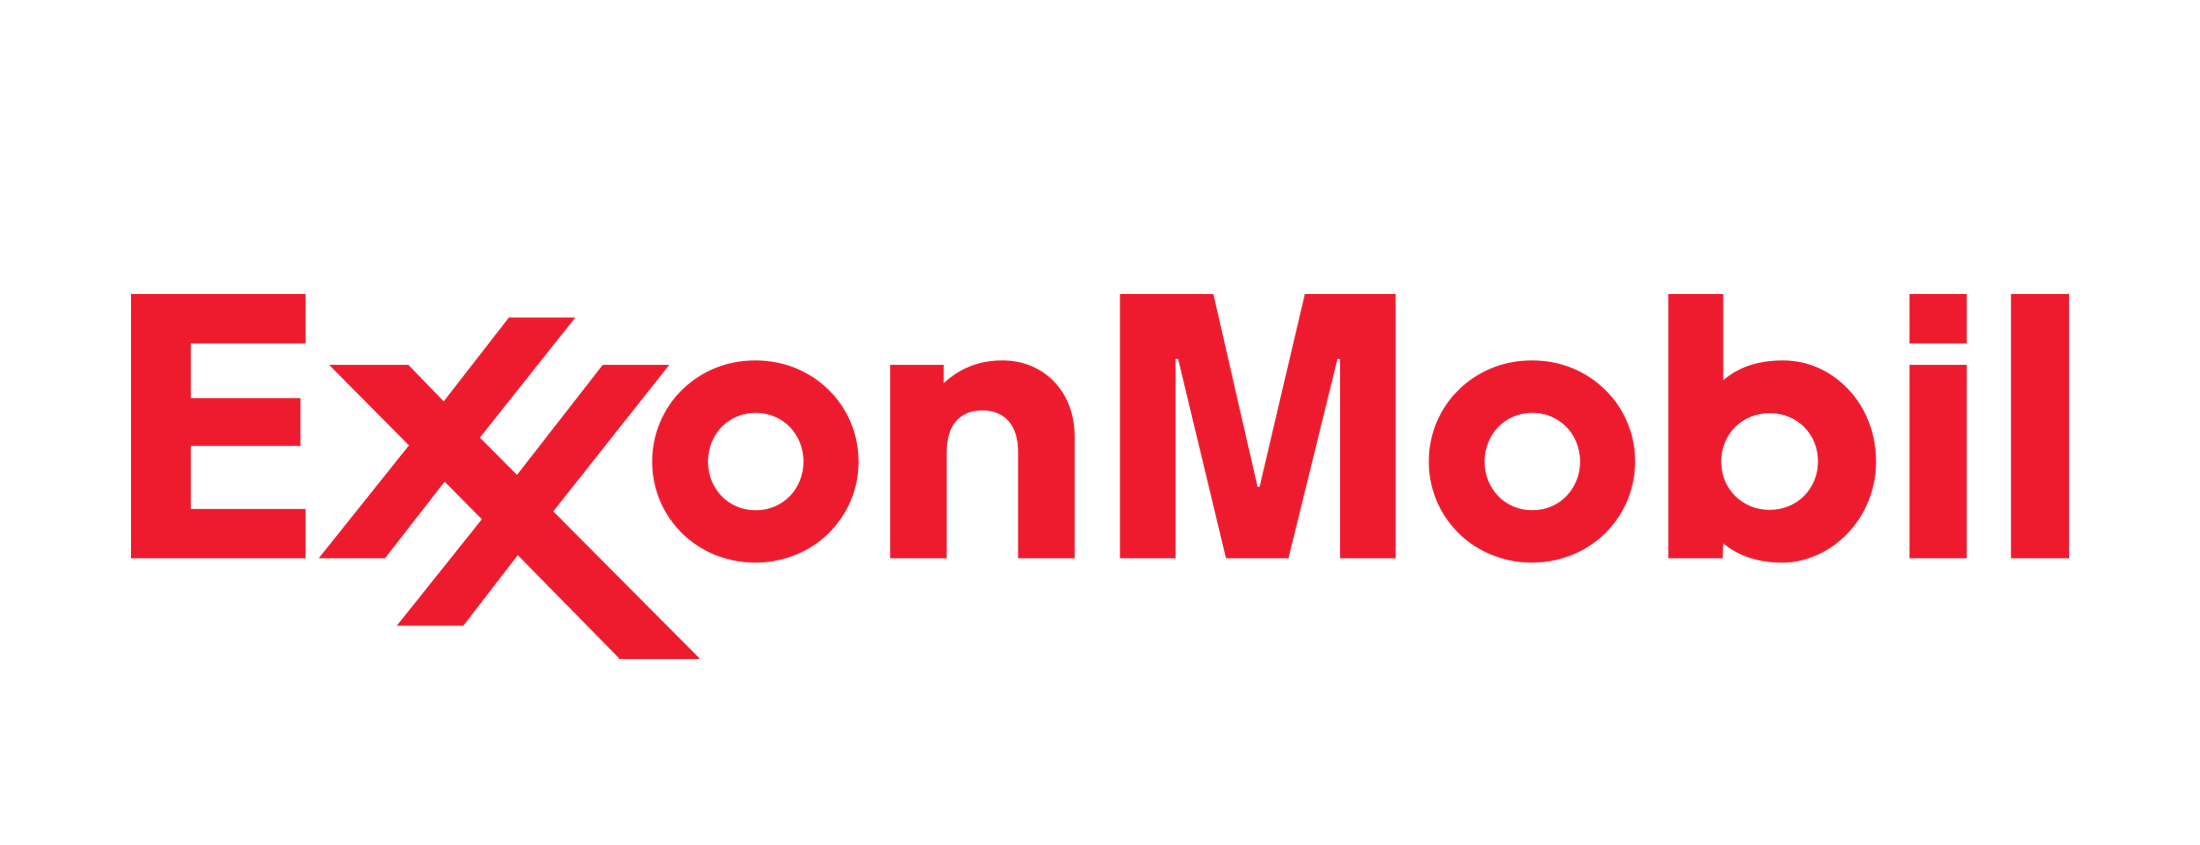 Exxonmobil_logo_PNG1